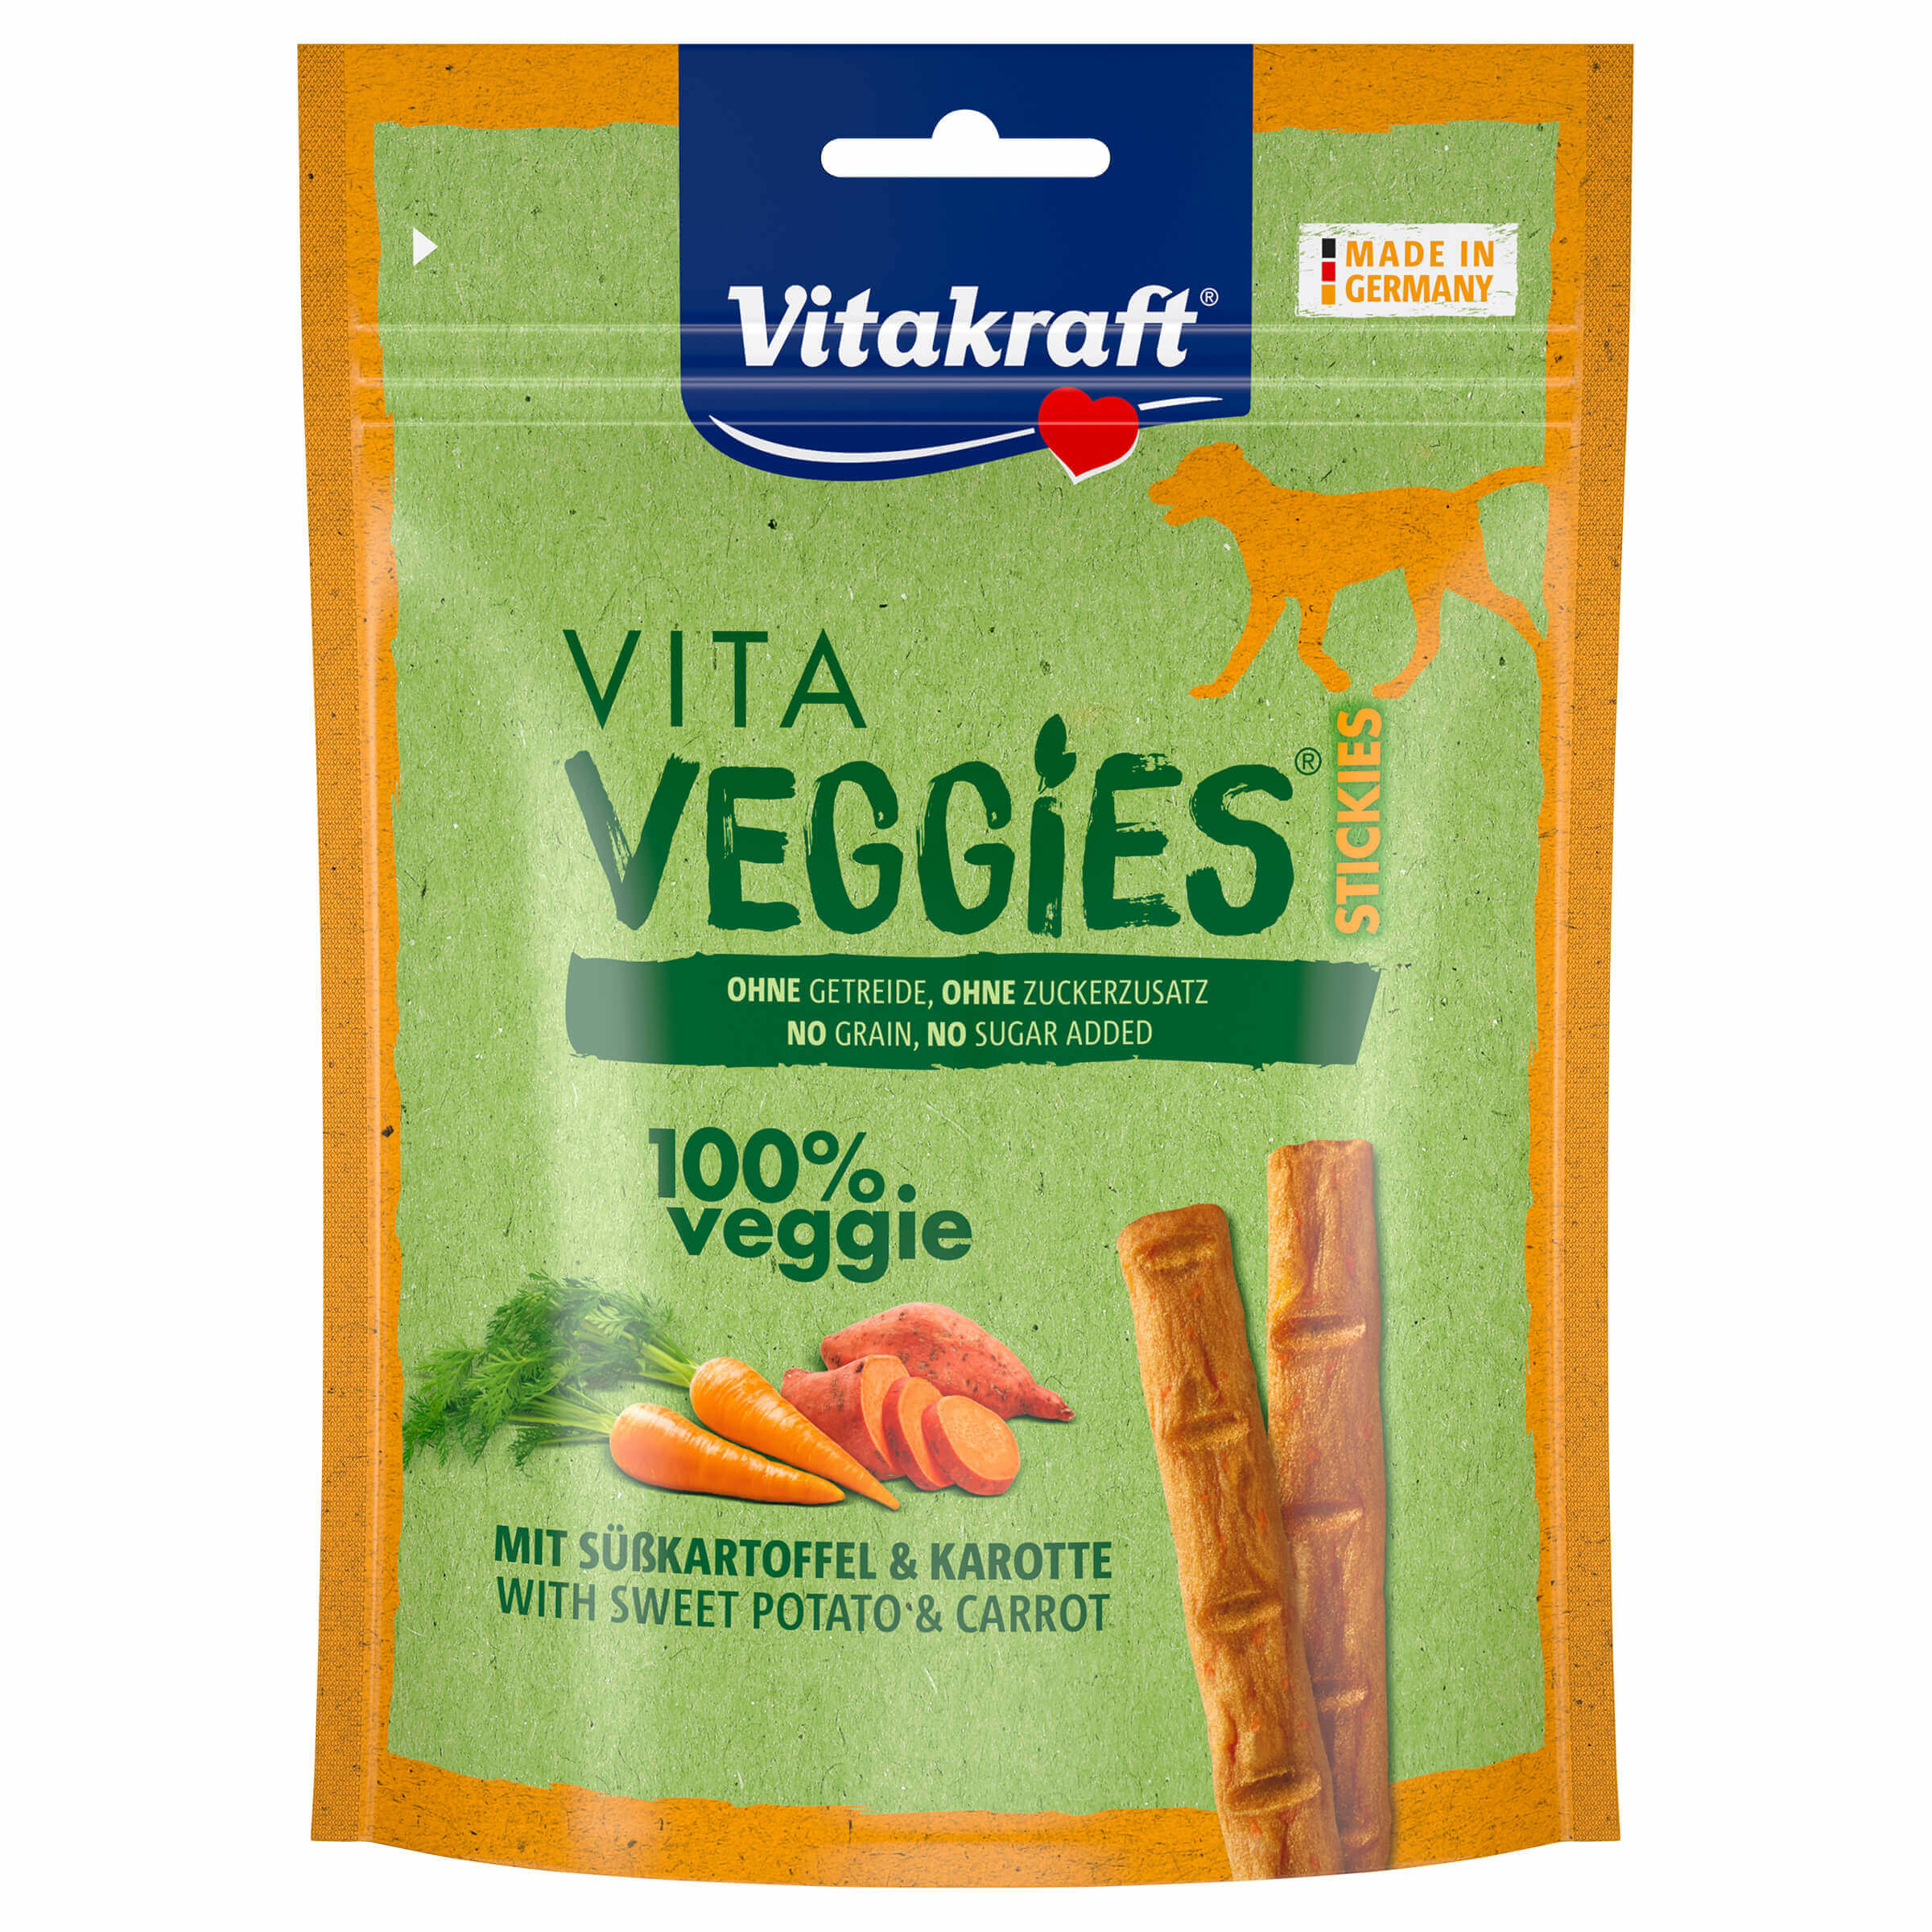 Vitakraft Veggies Sticks patates douces 80g